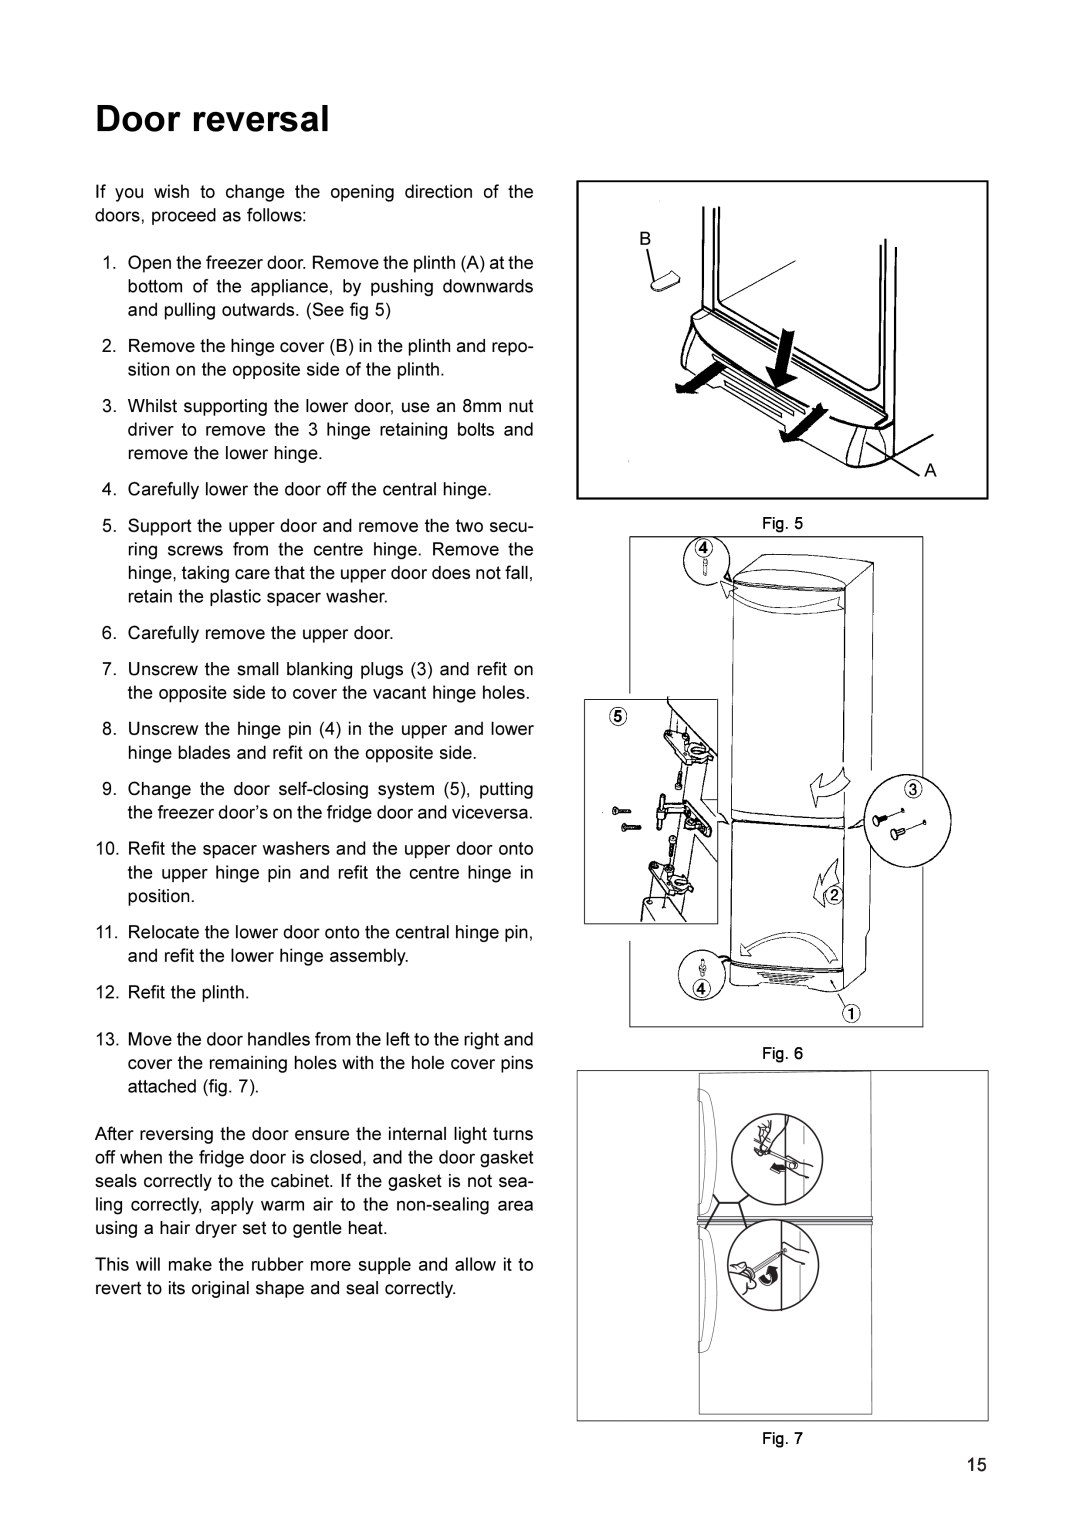 John Lewis JLFFS2002 manual Door reversal 